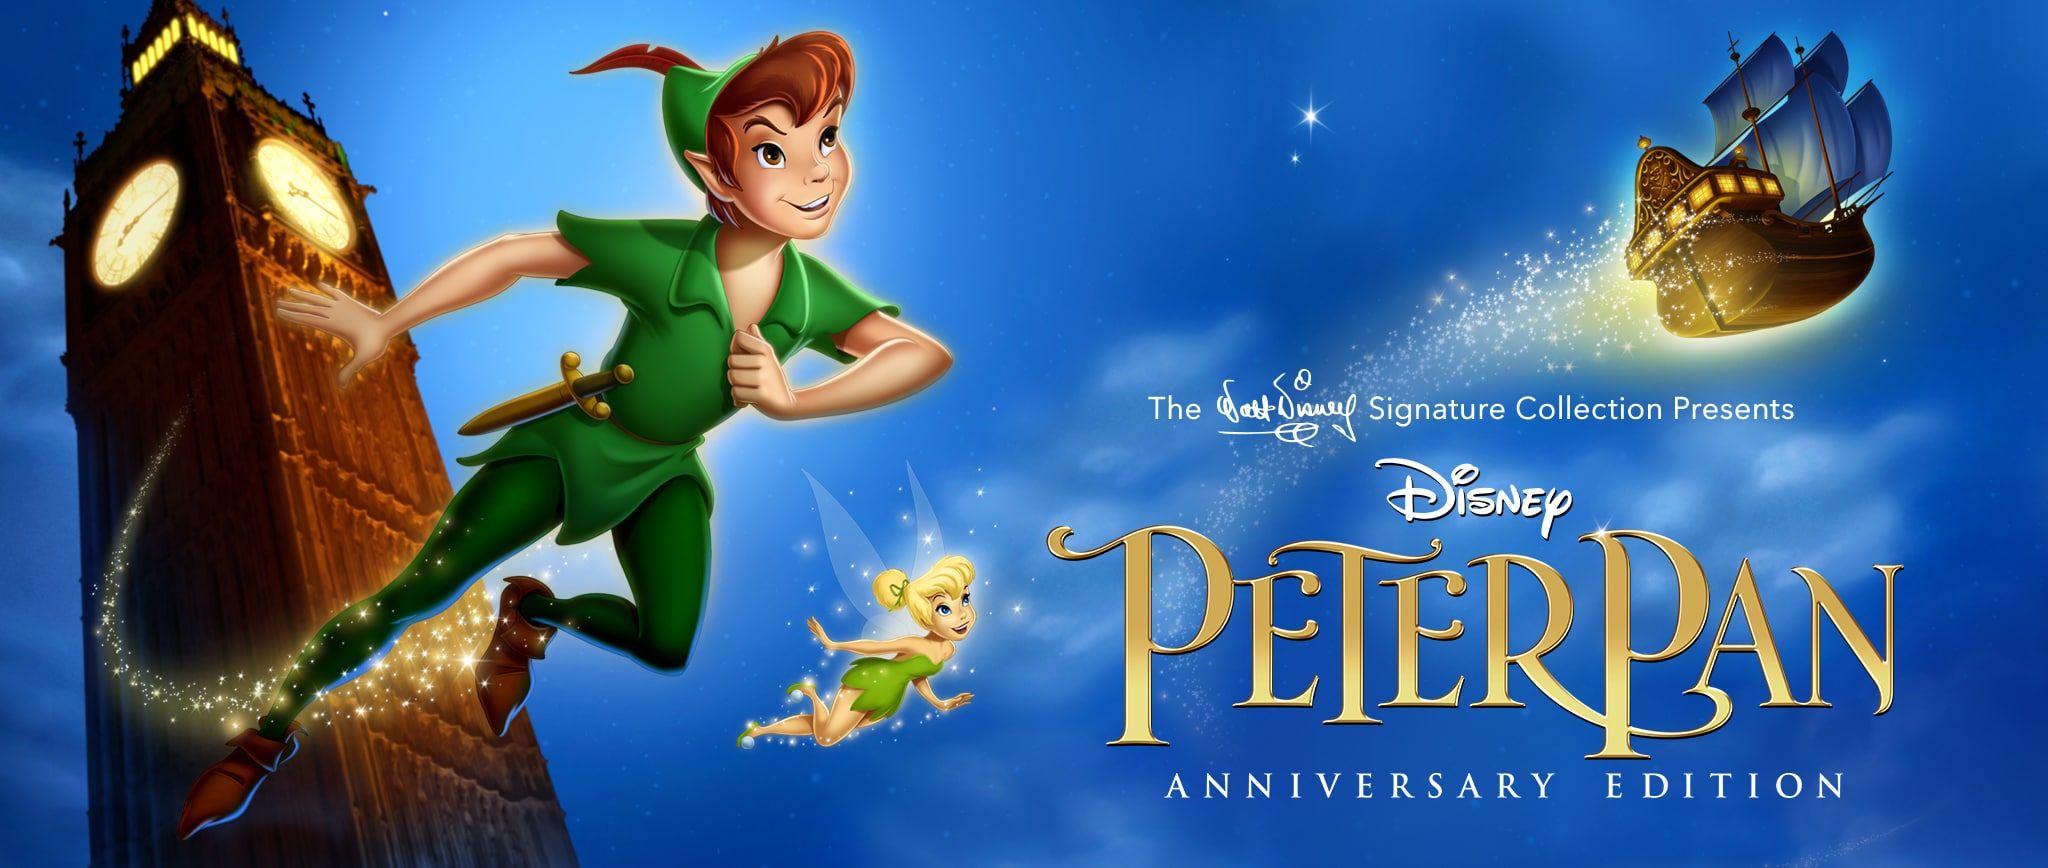 Disney Peter Pan Logo - Peter Pan | Disney Movies